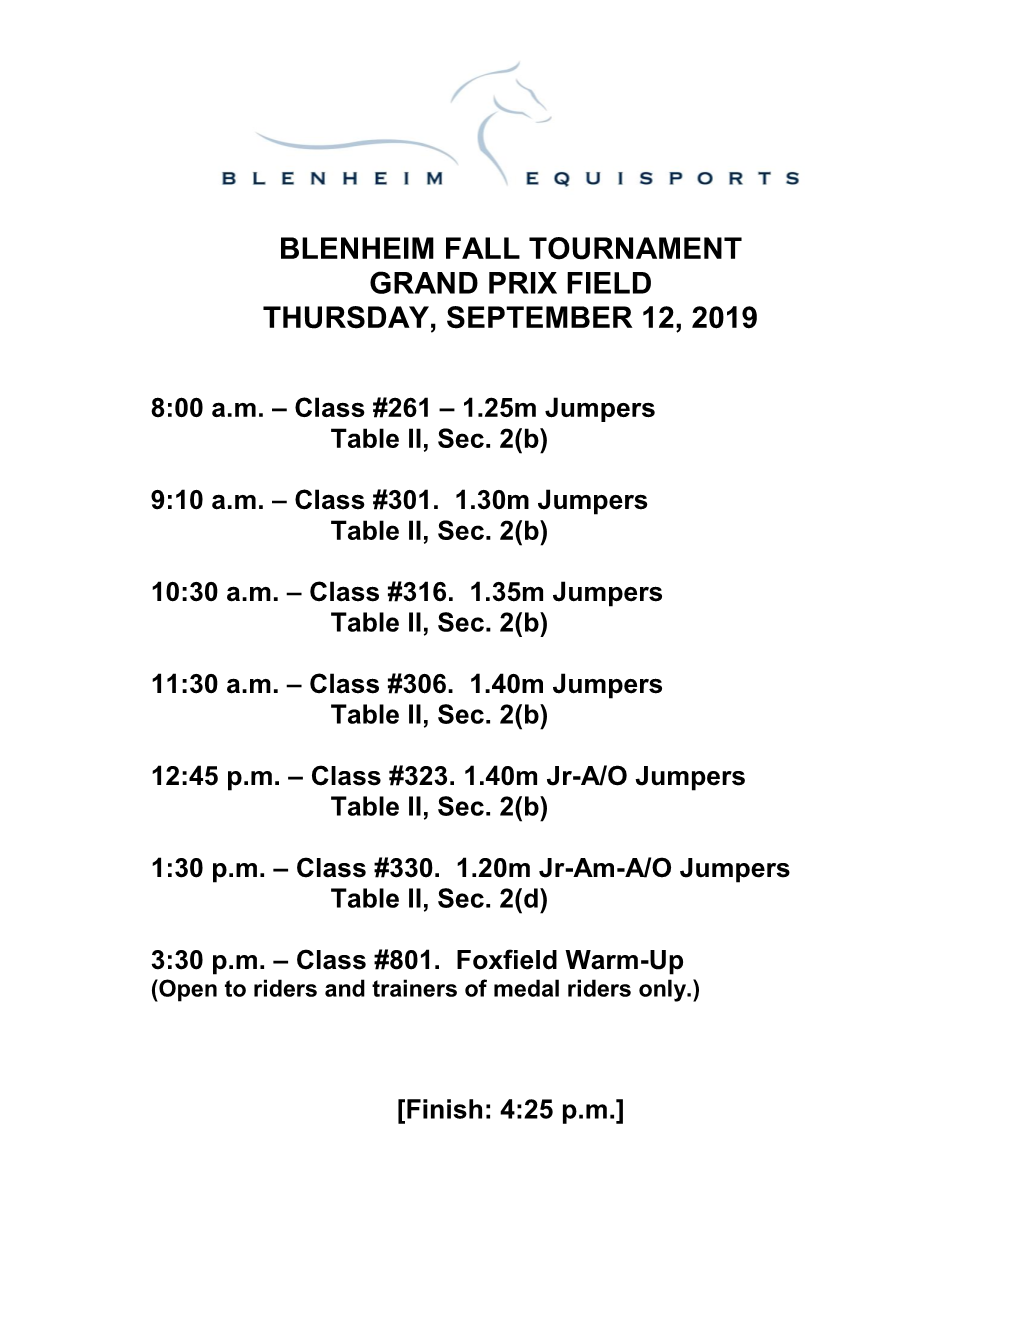 Blenheim Fall Tournament Grand Prix Field Thursday, September 12, 2019